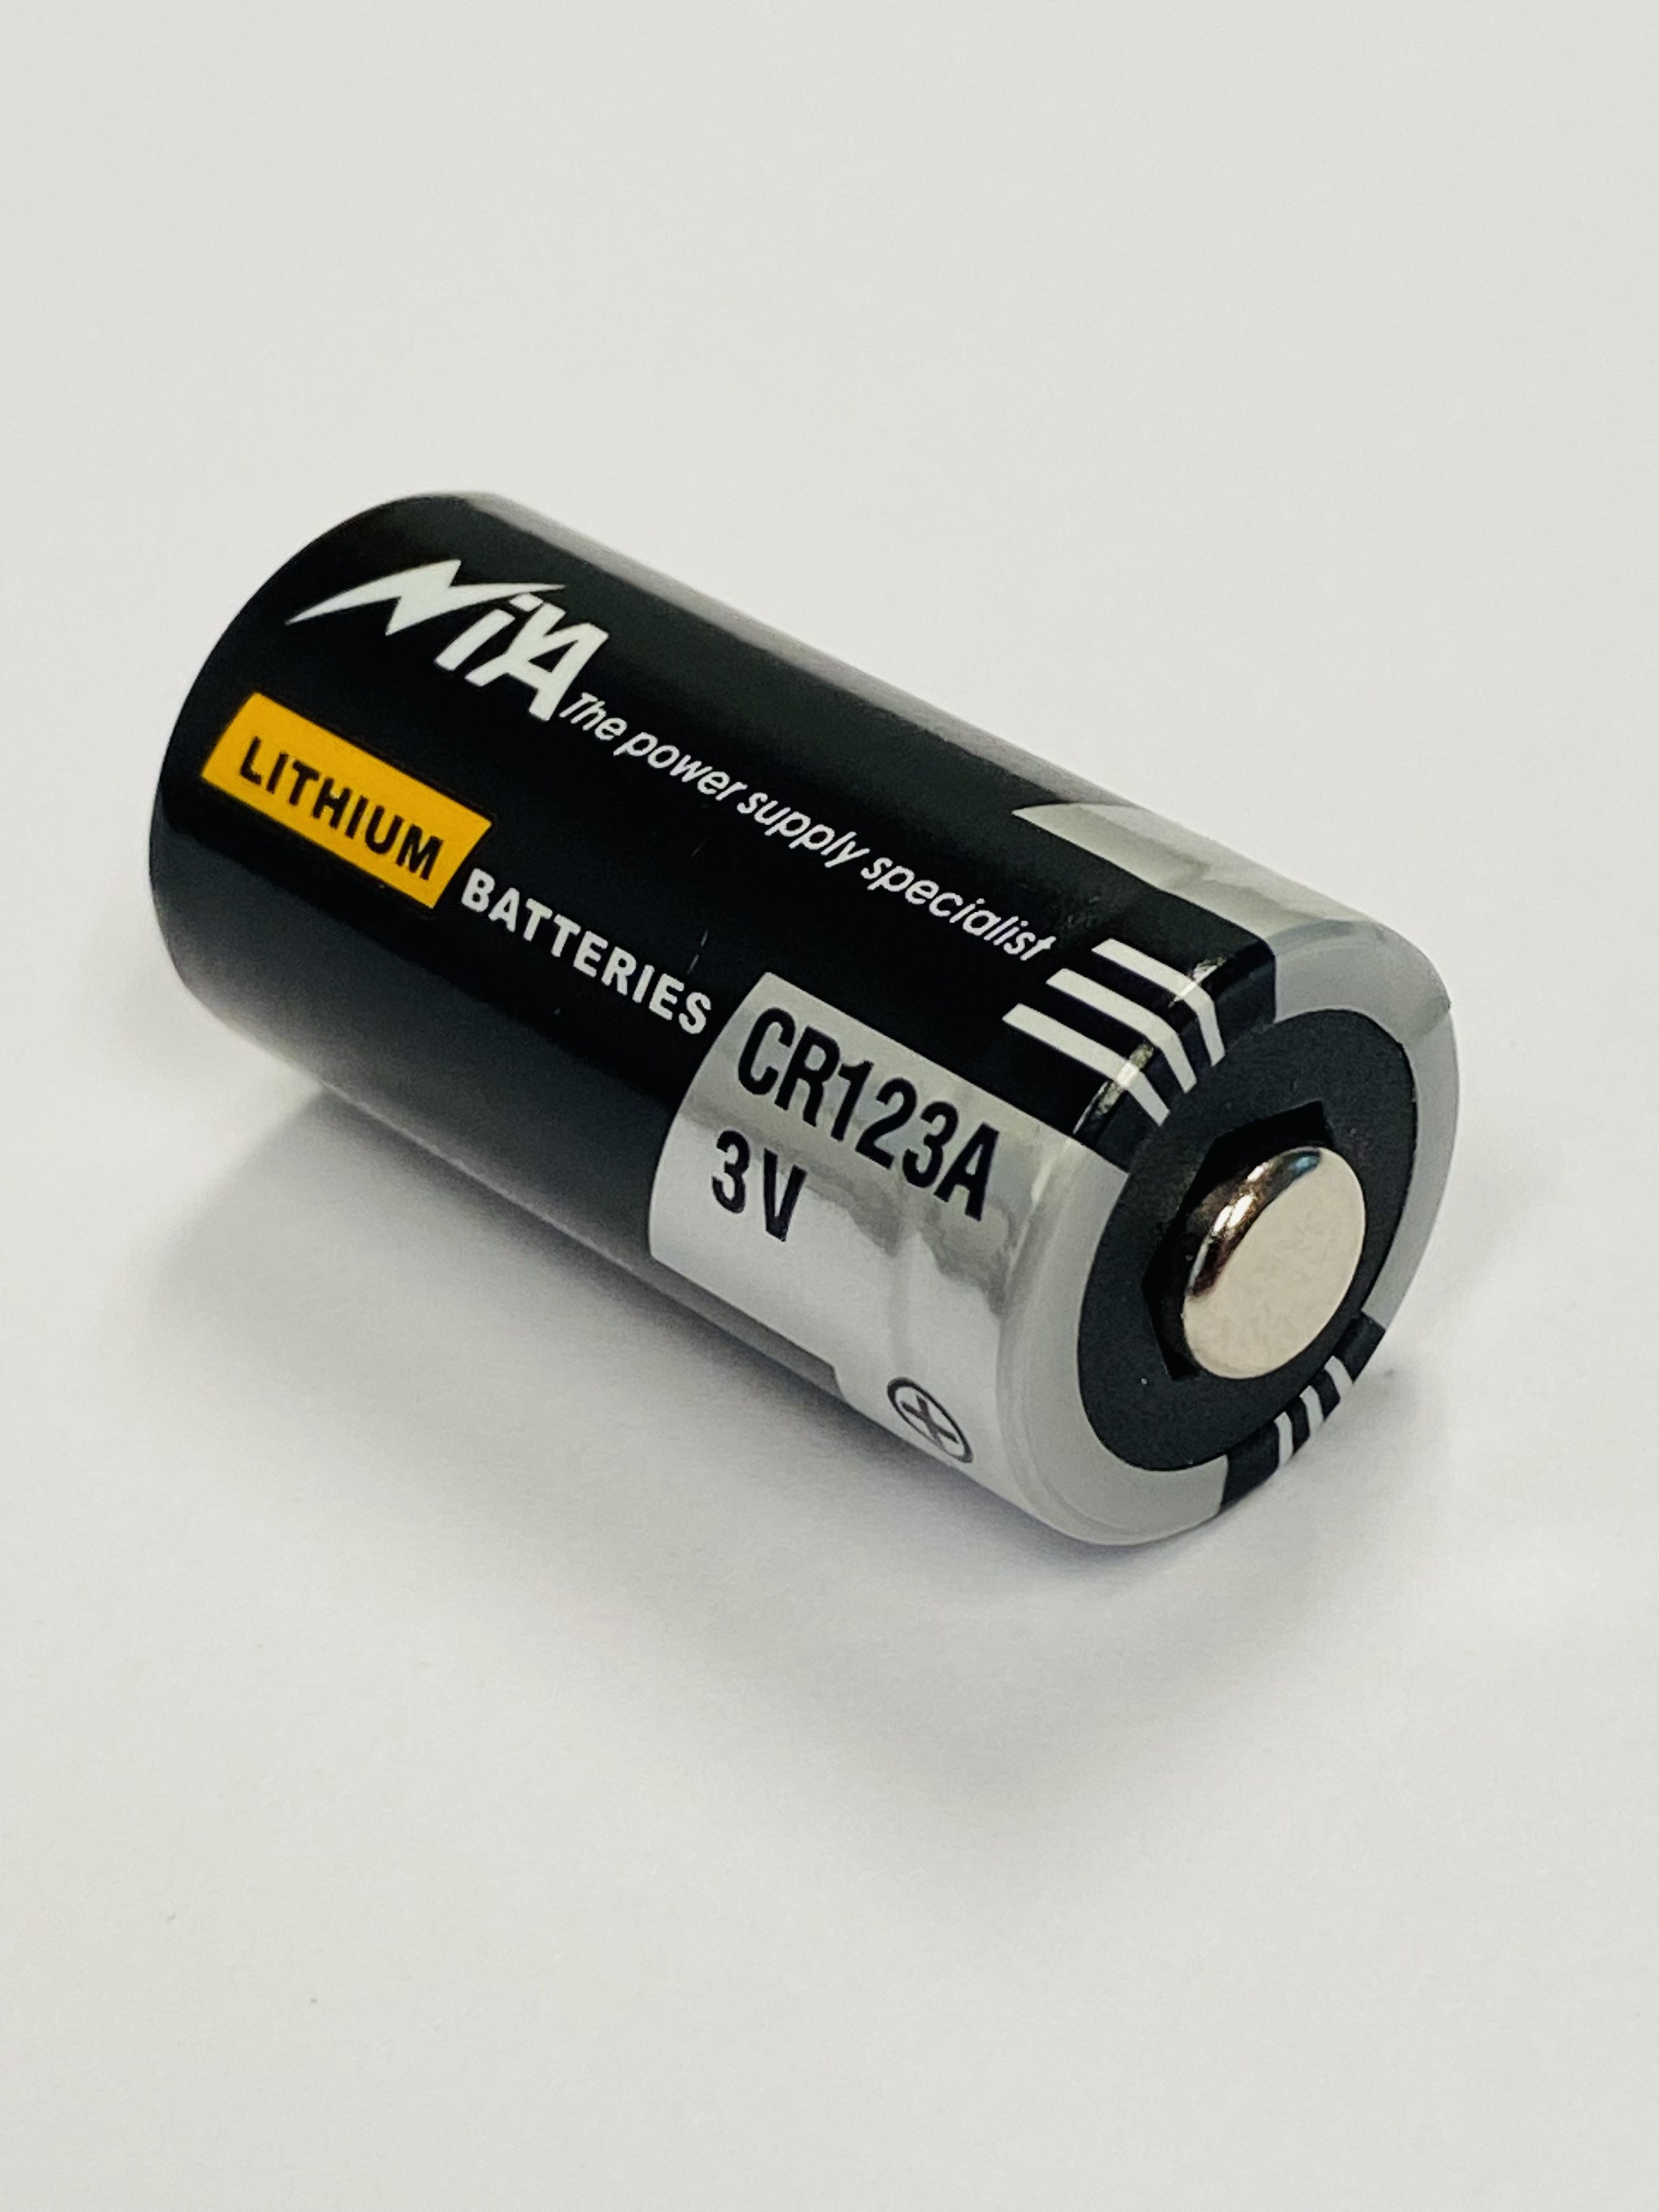 VARTA CR123A replacement battery